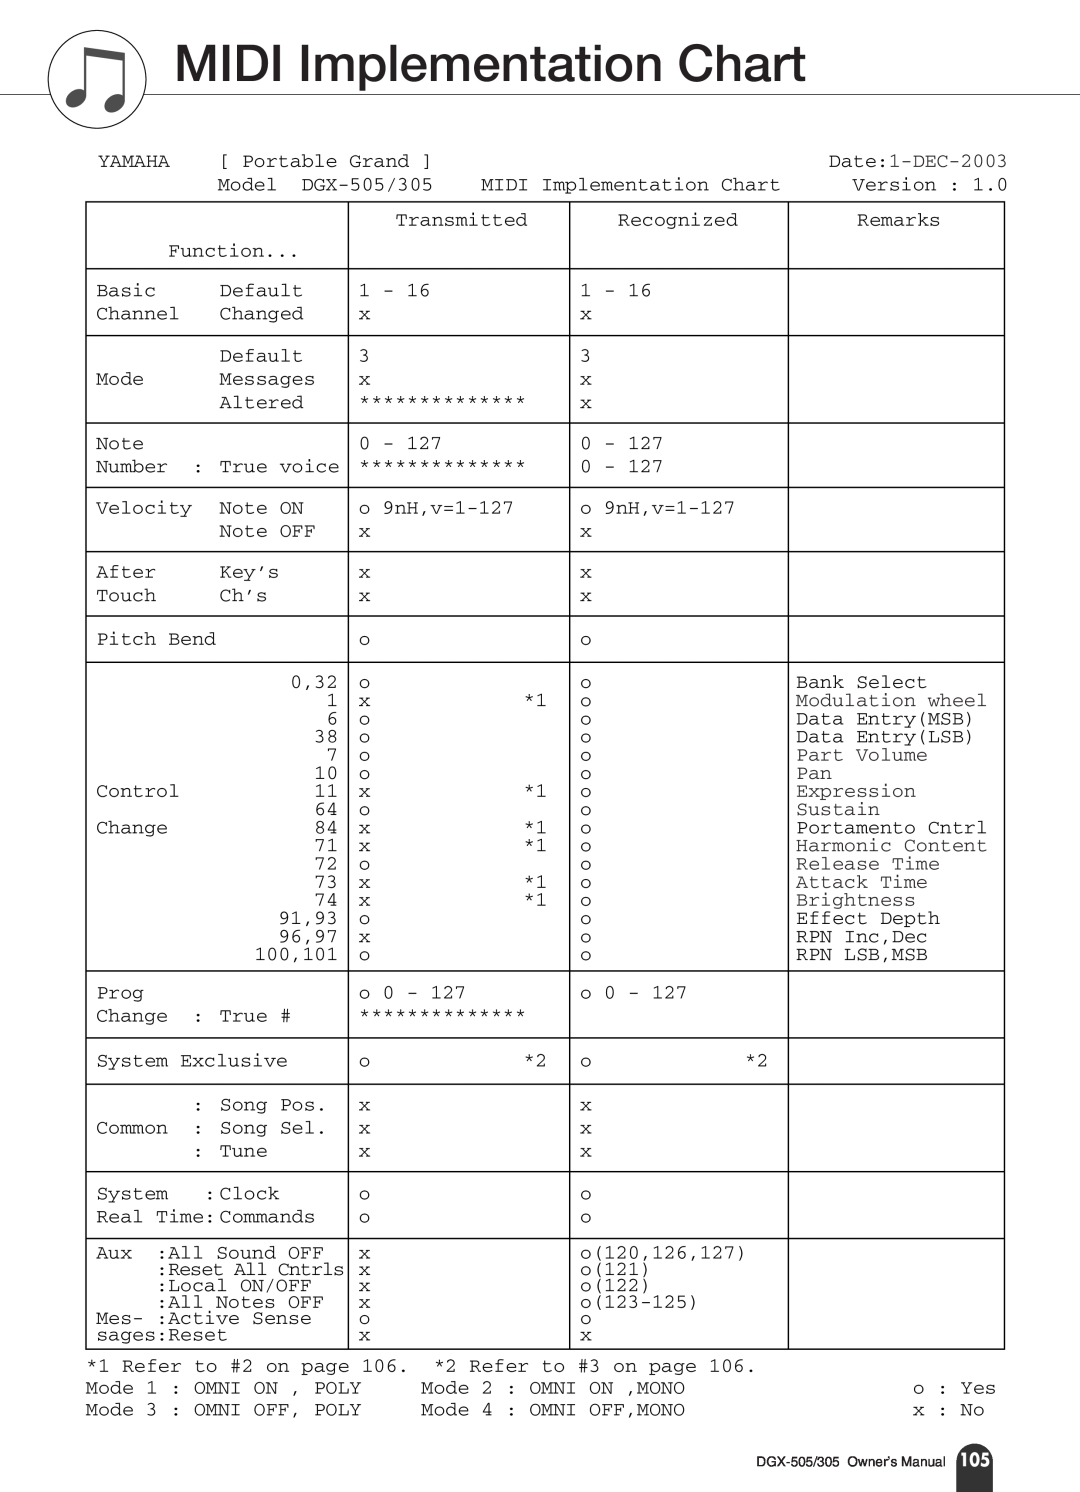 Yamaha DGX-305, DGX-505 manual MIDI Implementation Chart 